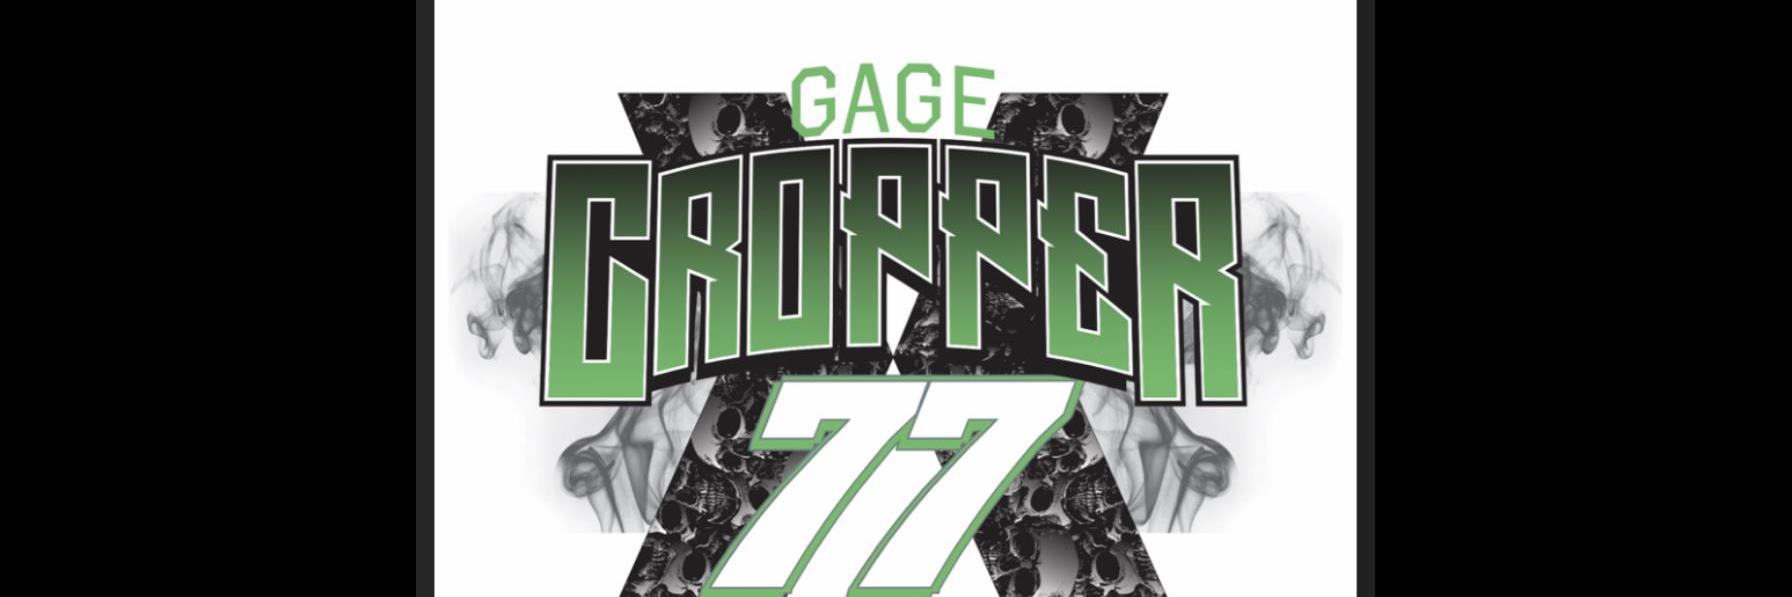 Gage Cropper